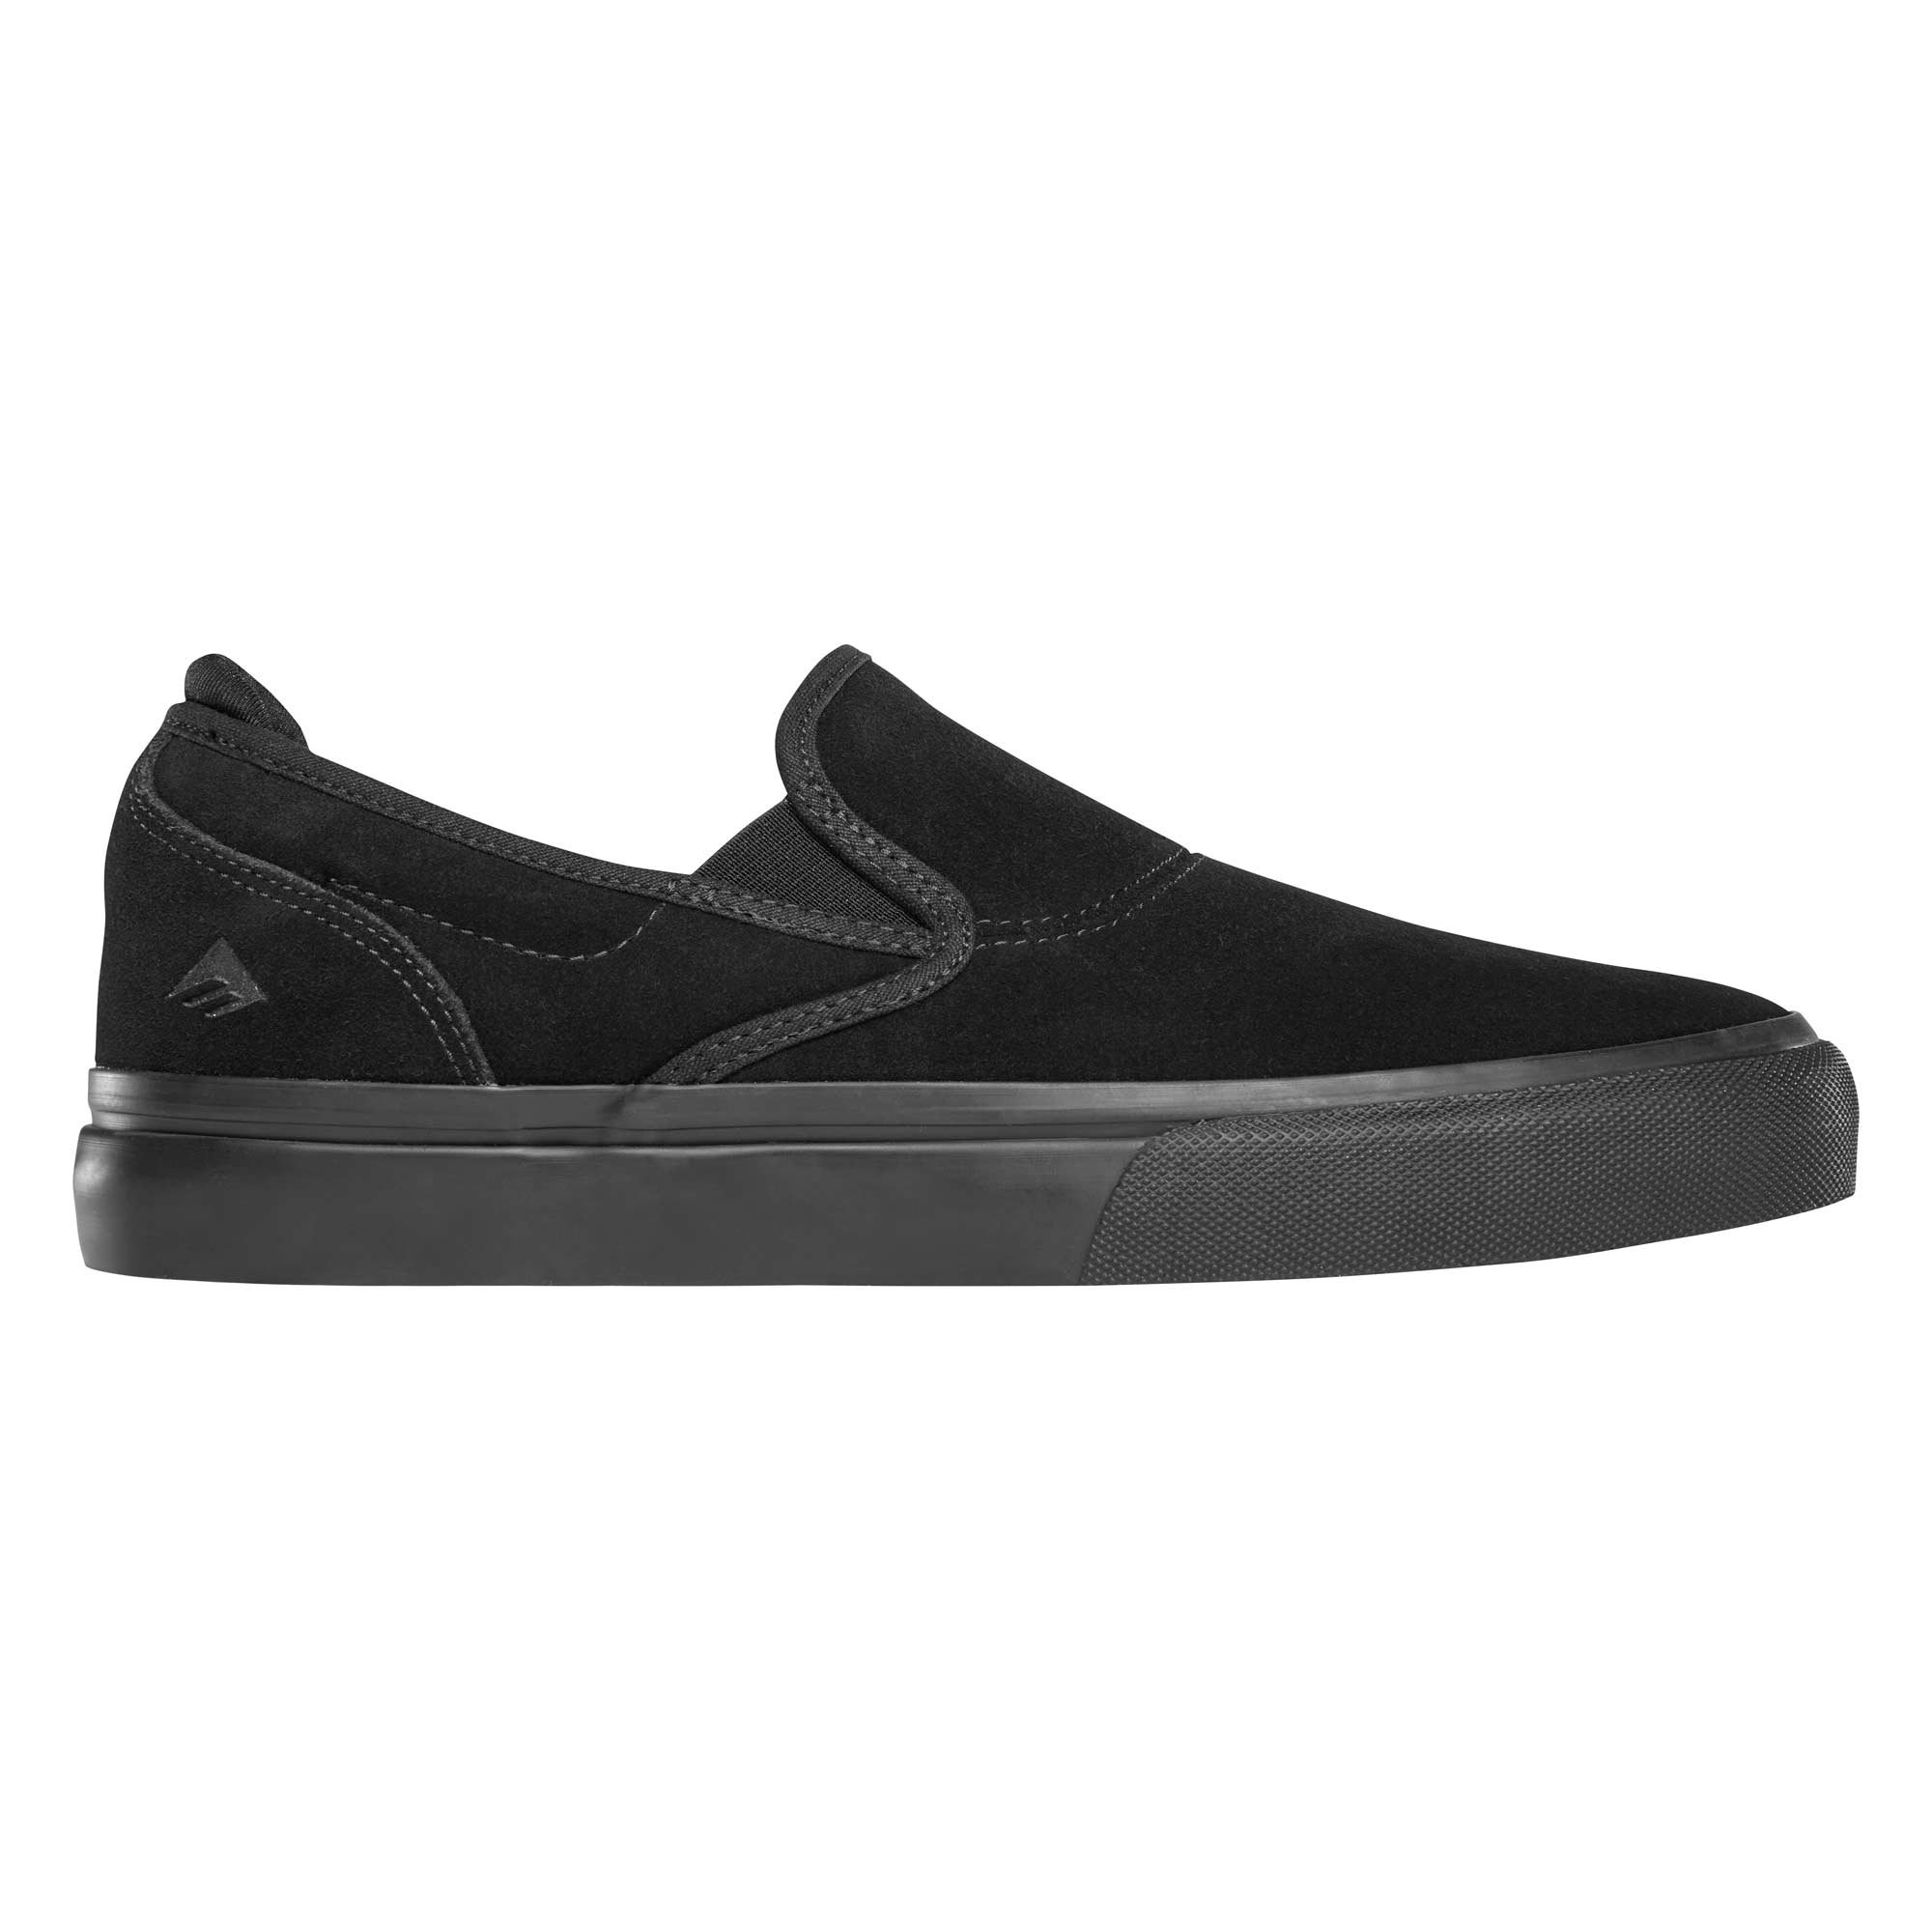 EMERICA Shoe WINO G6 SLIP-ON bla black